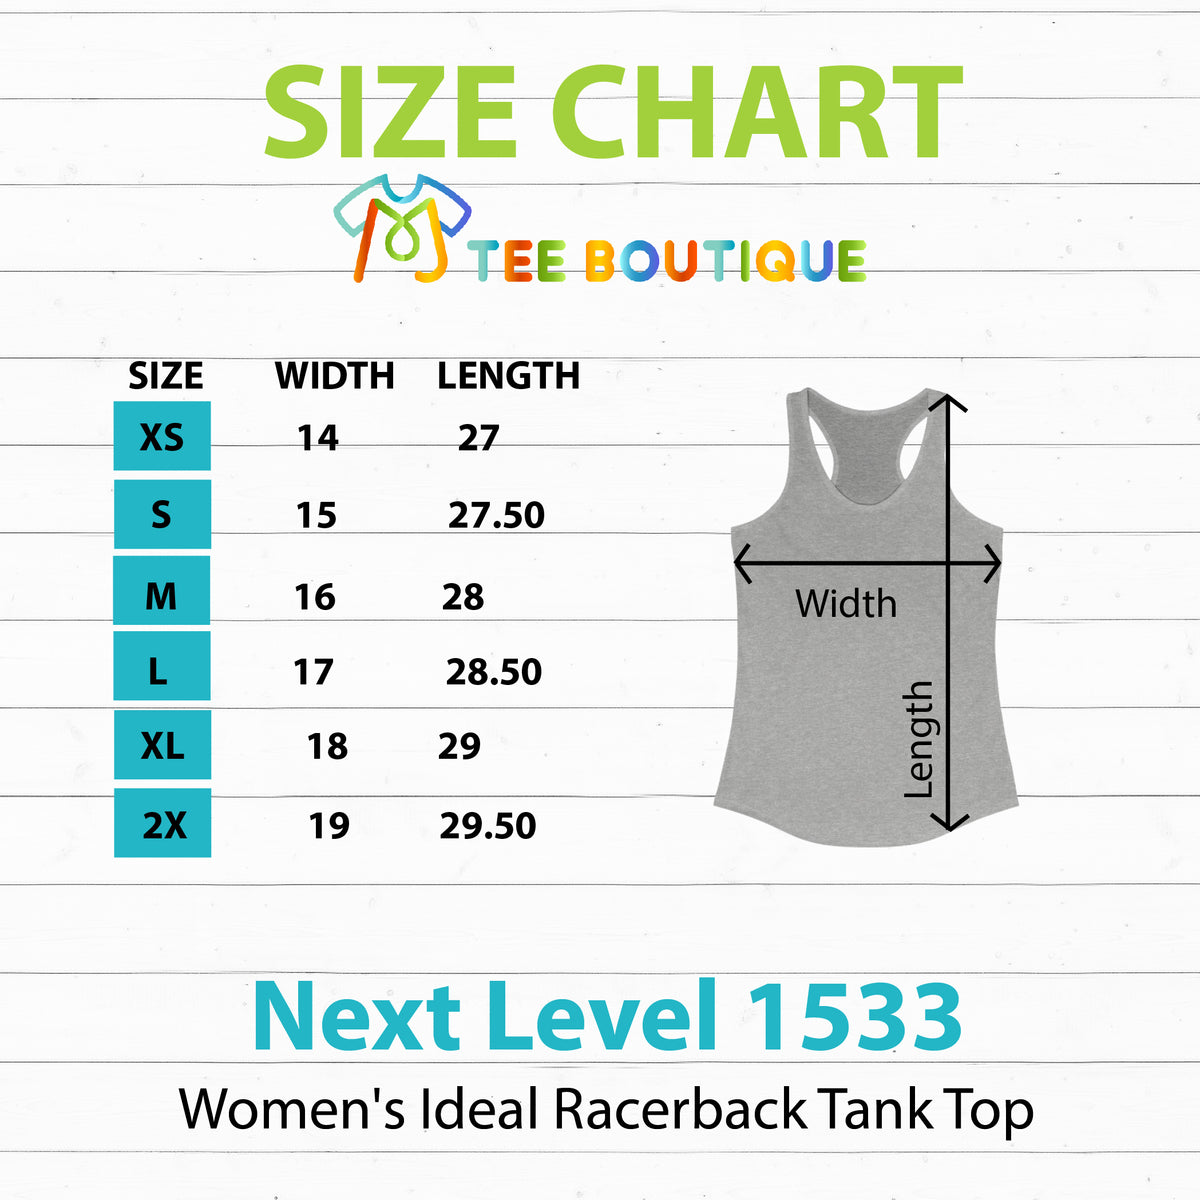 Retro 70s Floral Bigfoot Shirt | Funny Flower Power Shirt | Women's Slim-fit Racerback Tank Top